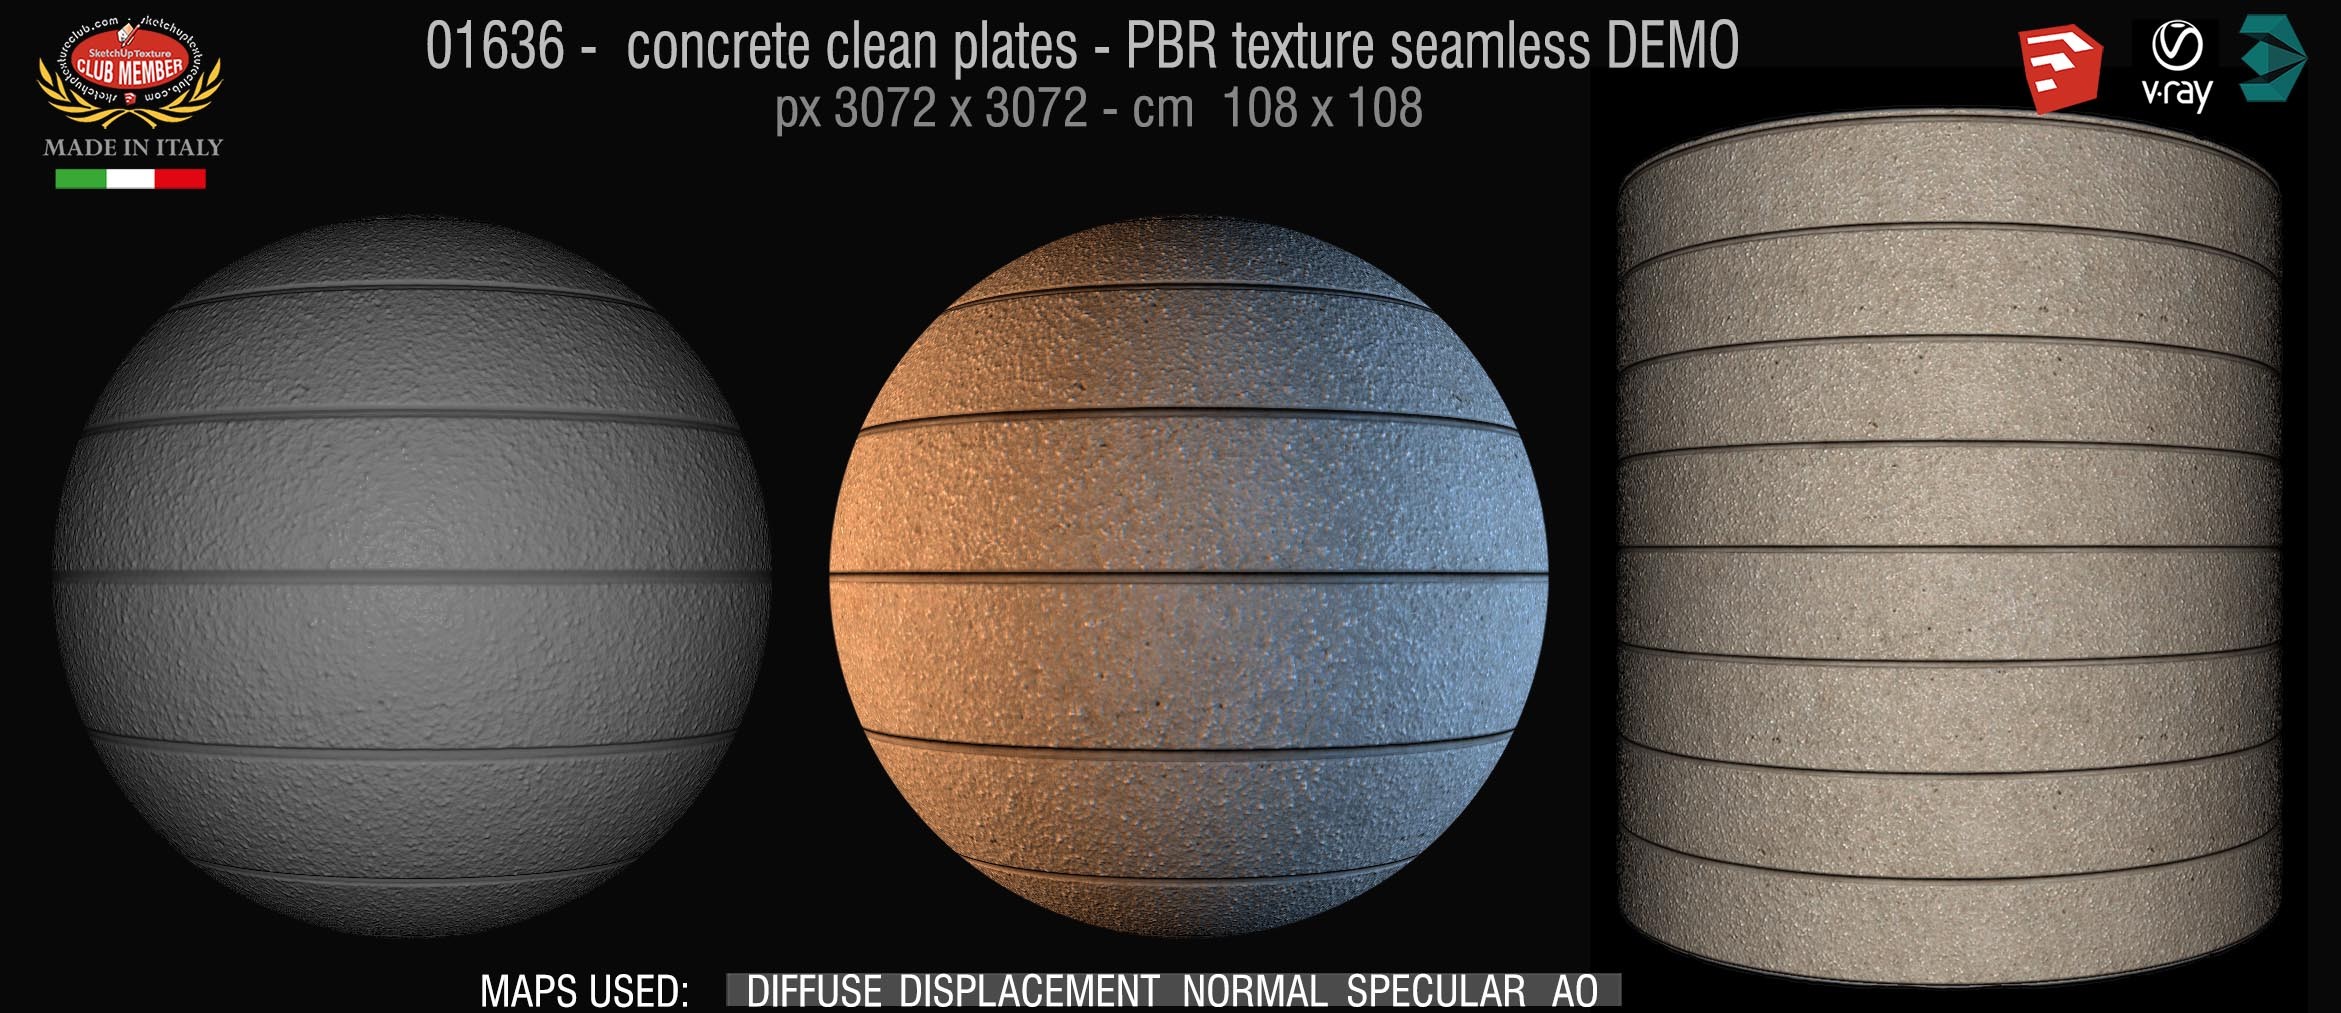 01636 concrete clean plates wall PBR texture seamless DEMO